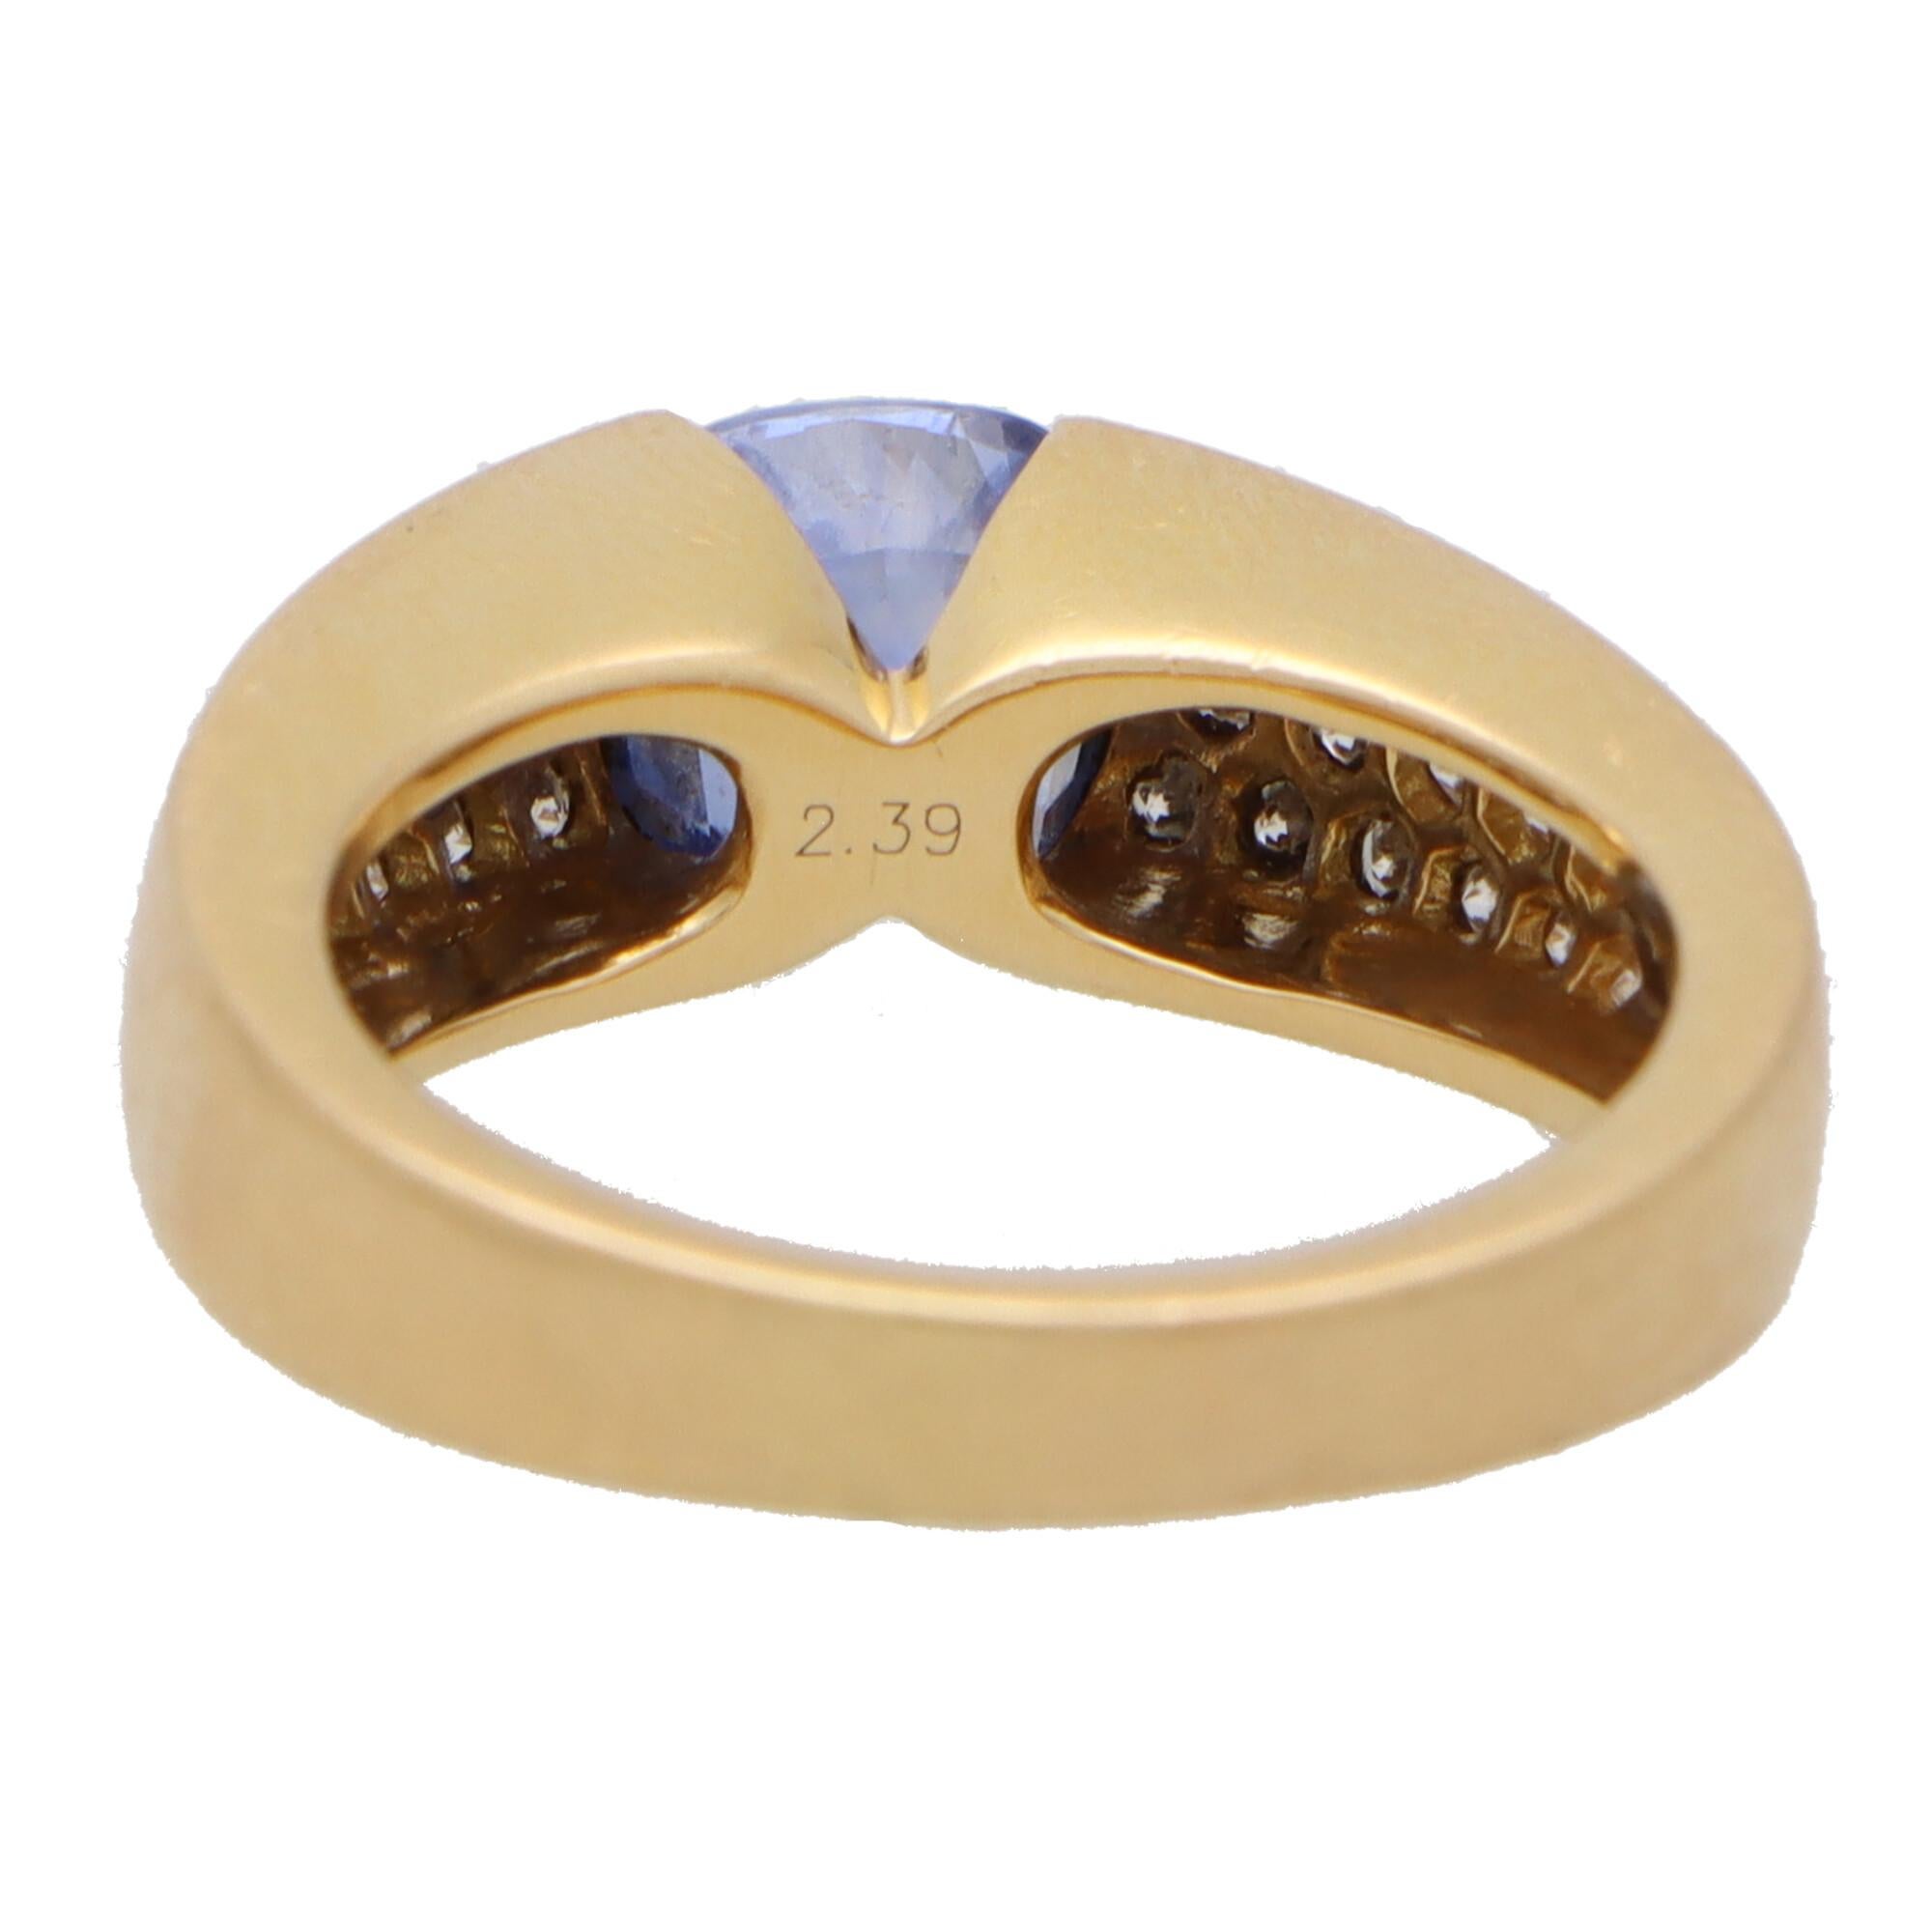 Cushion Cut Vintage Boucheron Diamond and Sapphire Bombé Ring Set in 18k Yellow Gold